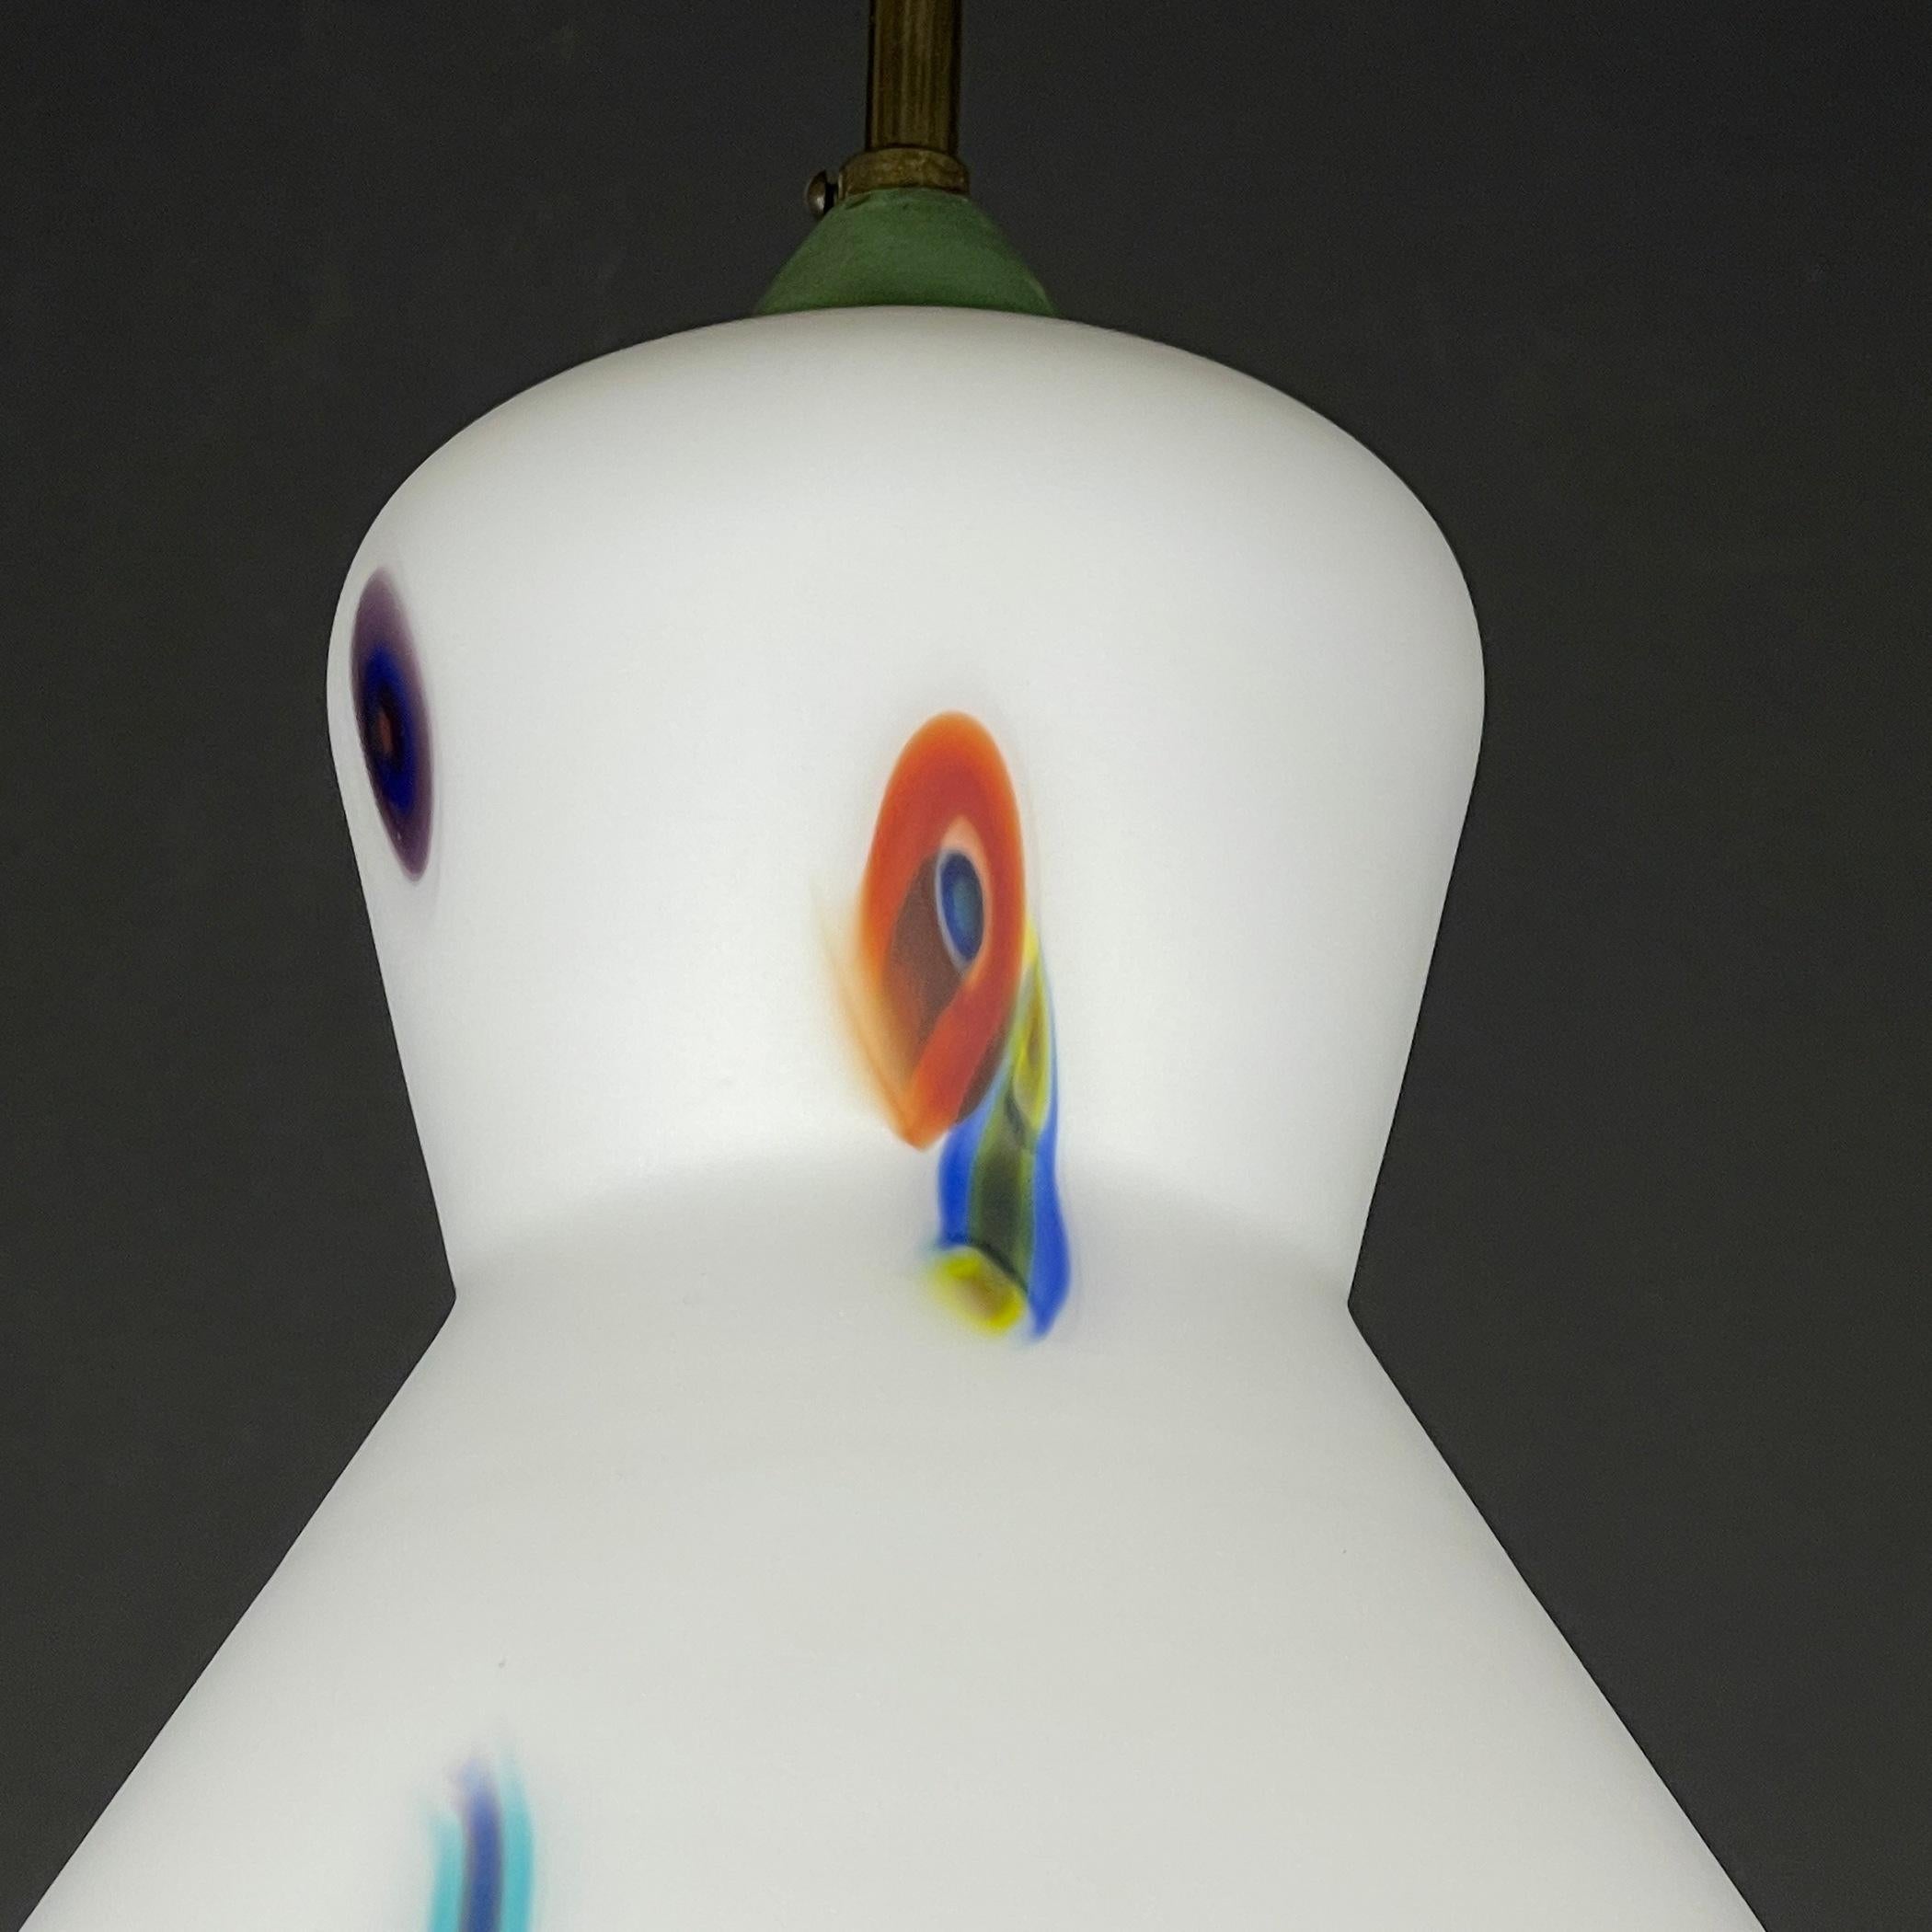 Italian Midcentury Multicolor Opaline Murano Glass Pendant Lamp by Stilnovo Italy 1950s For Sale